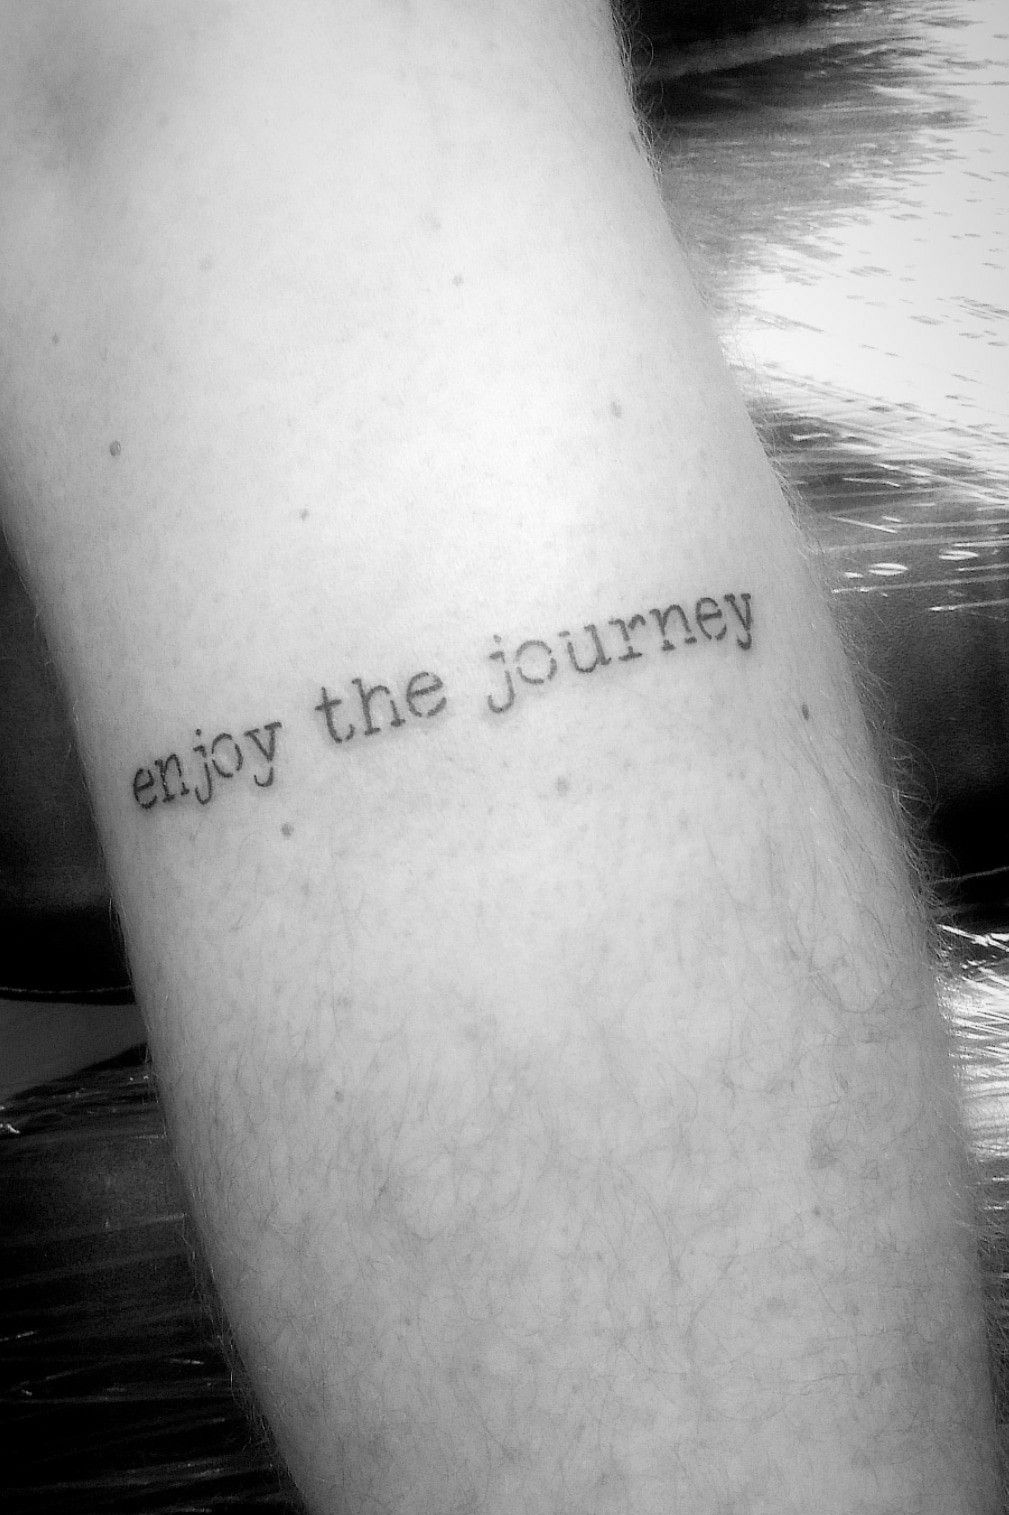 Enjoy the Journey